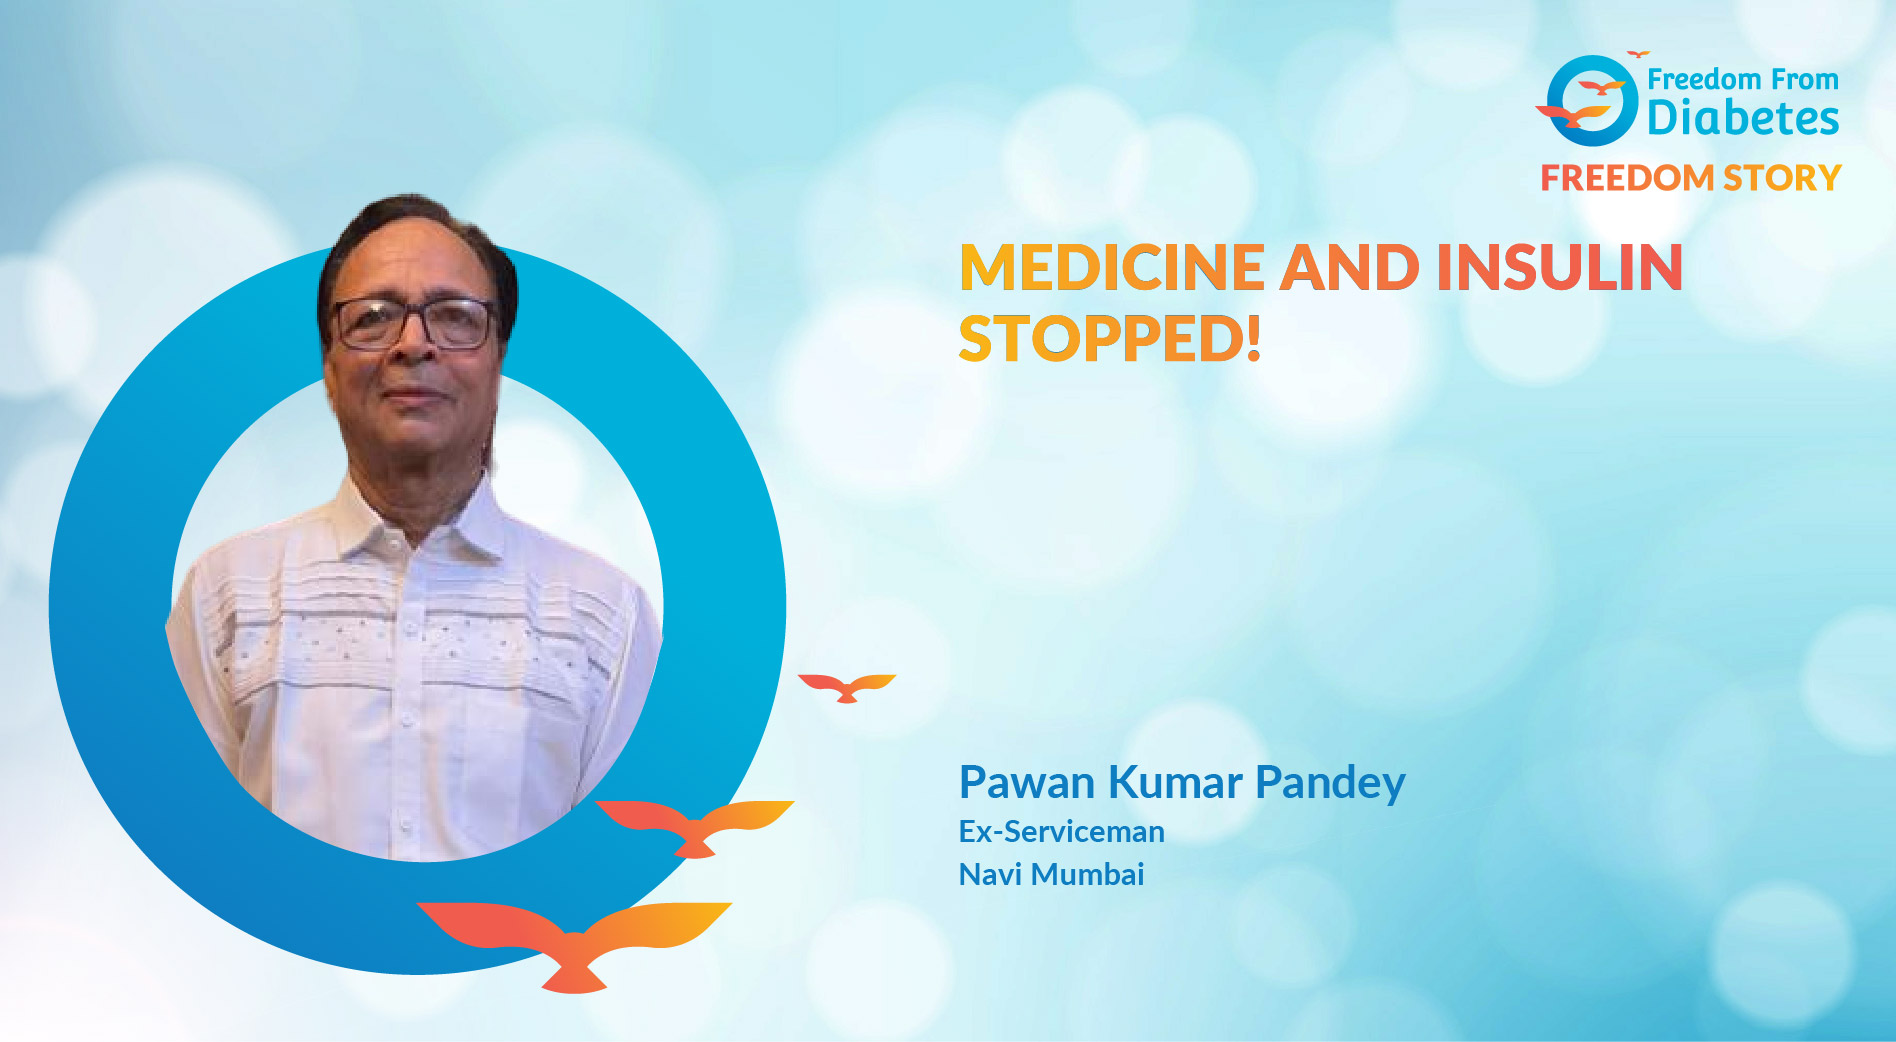 Pawan Kumar Pandey : An ex-serviceman's success story